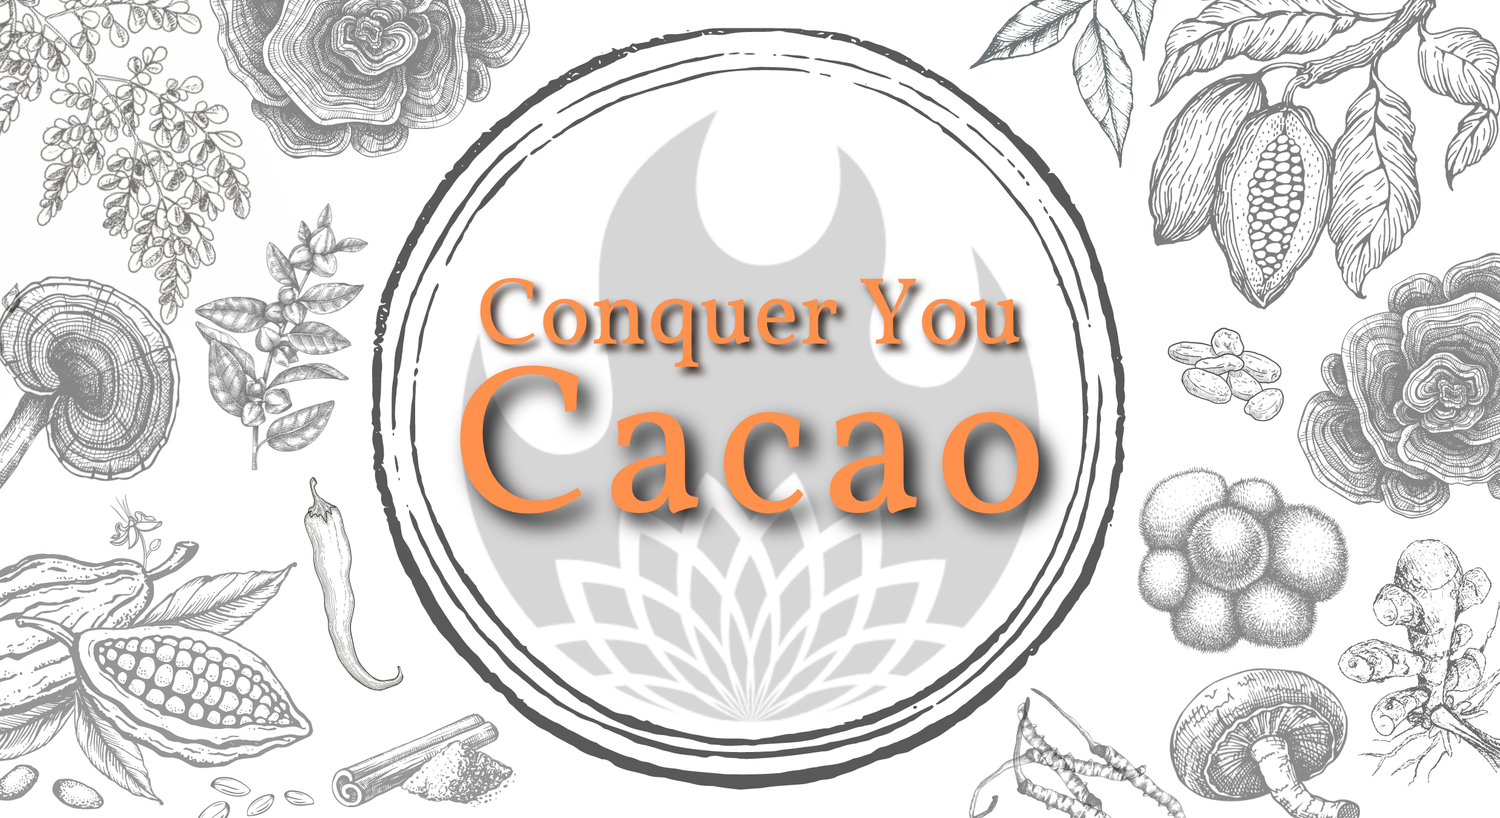 Conquer You Cacao